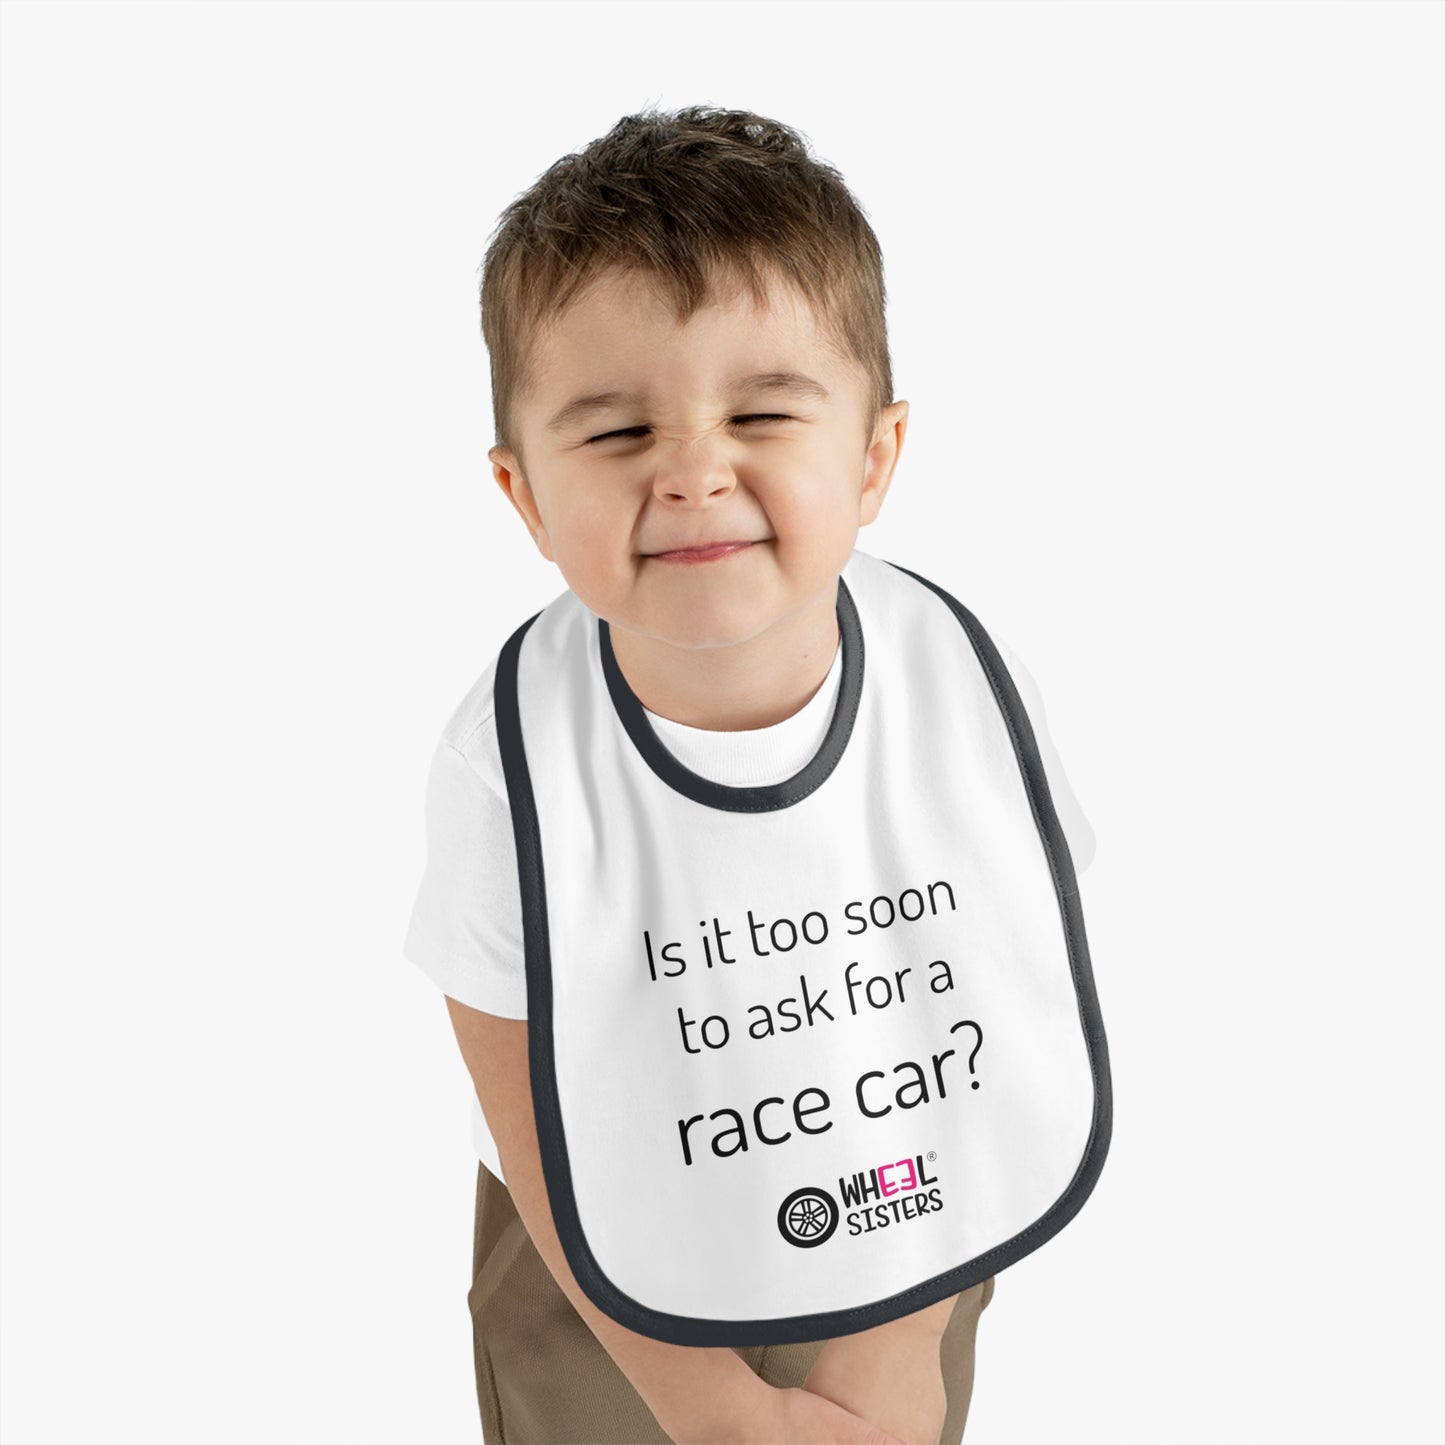 WHEEL SISTERS Baby Bib race car